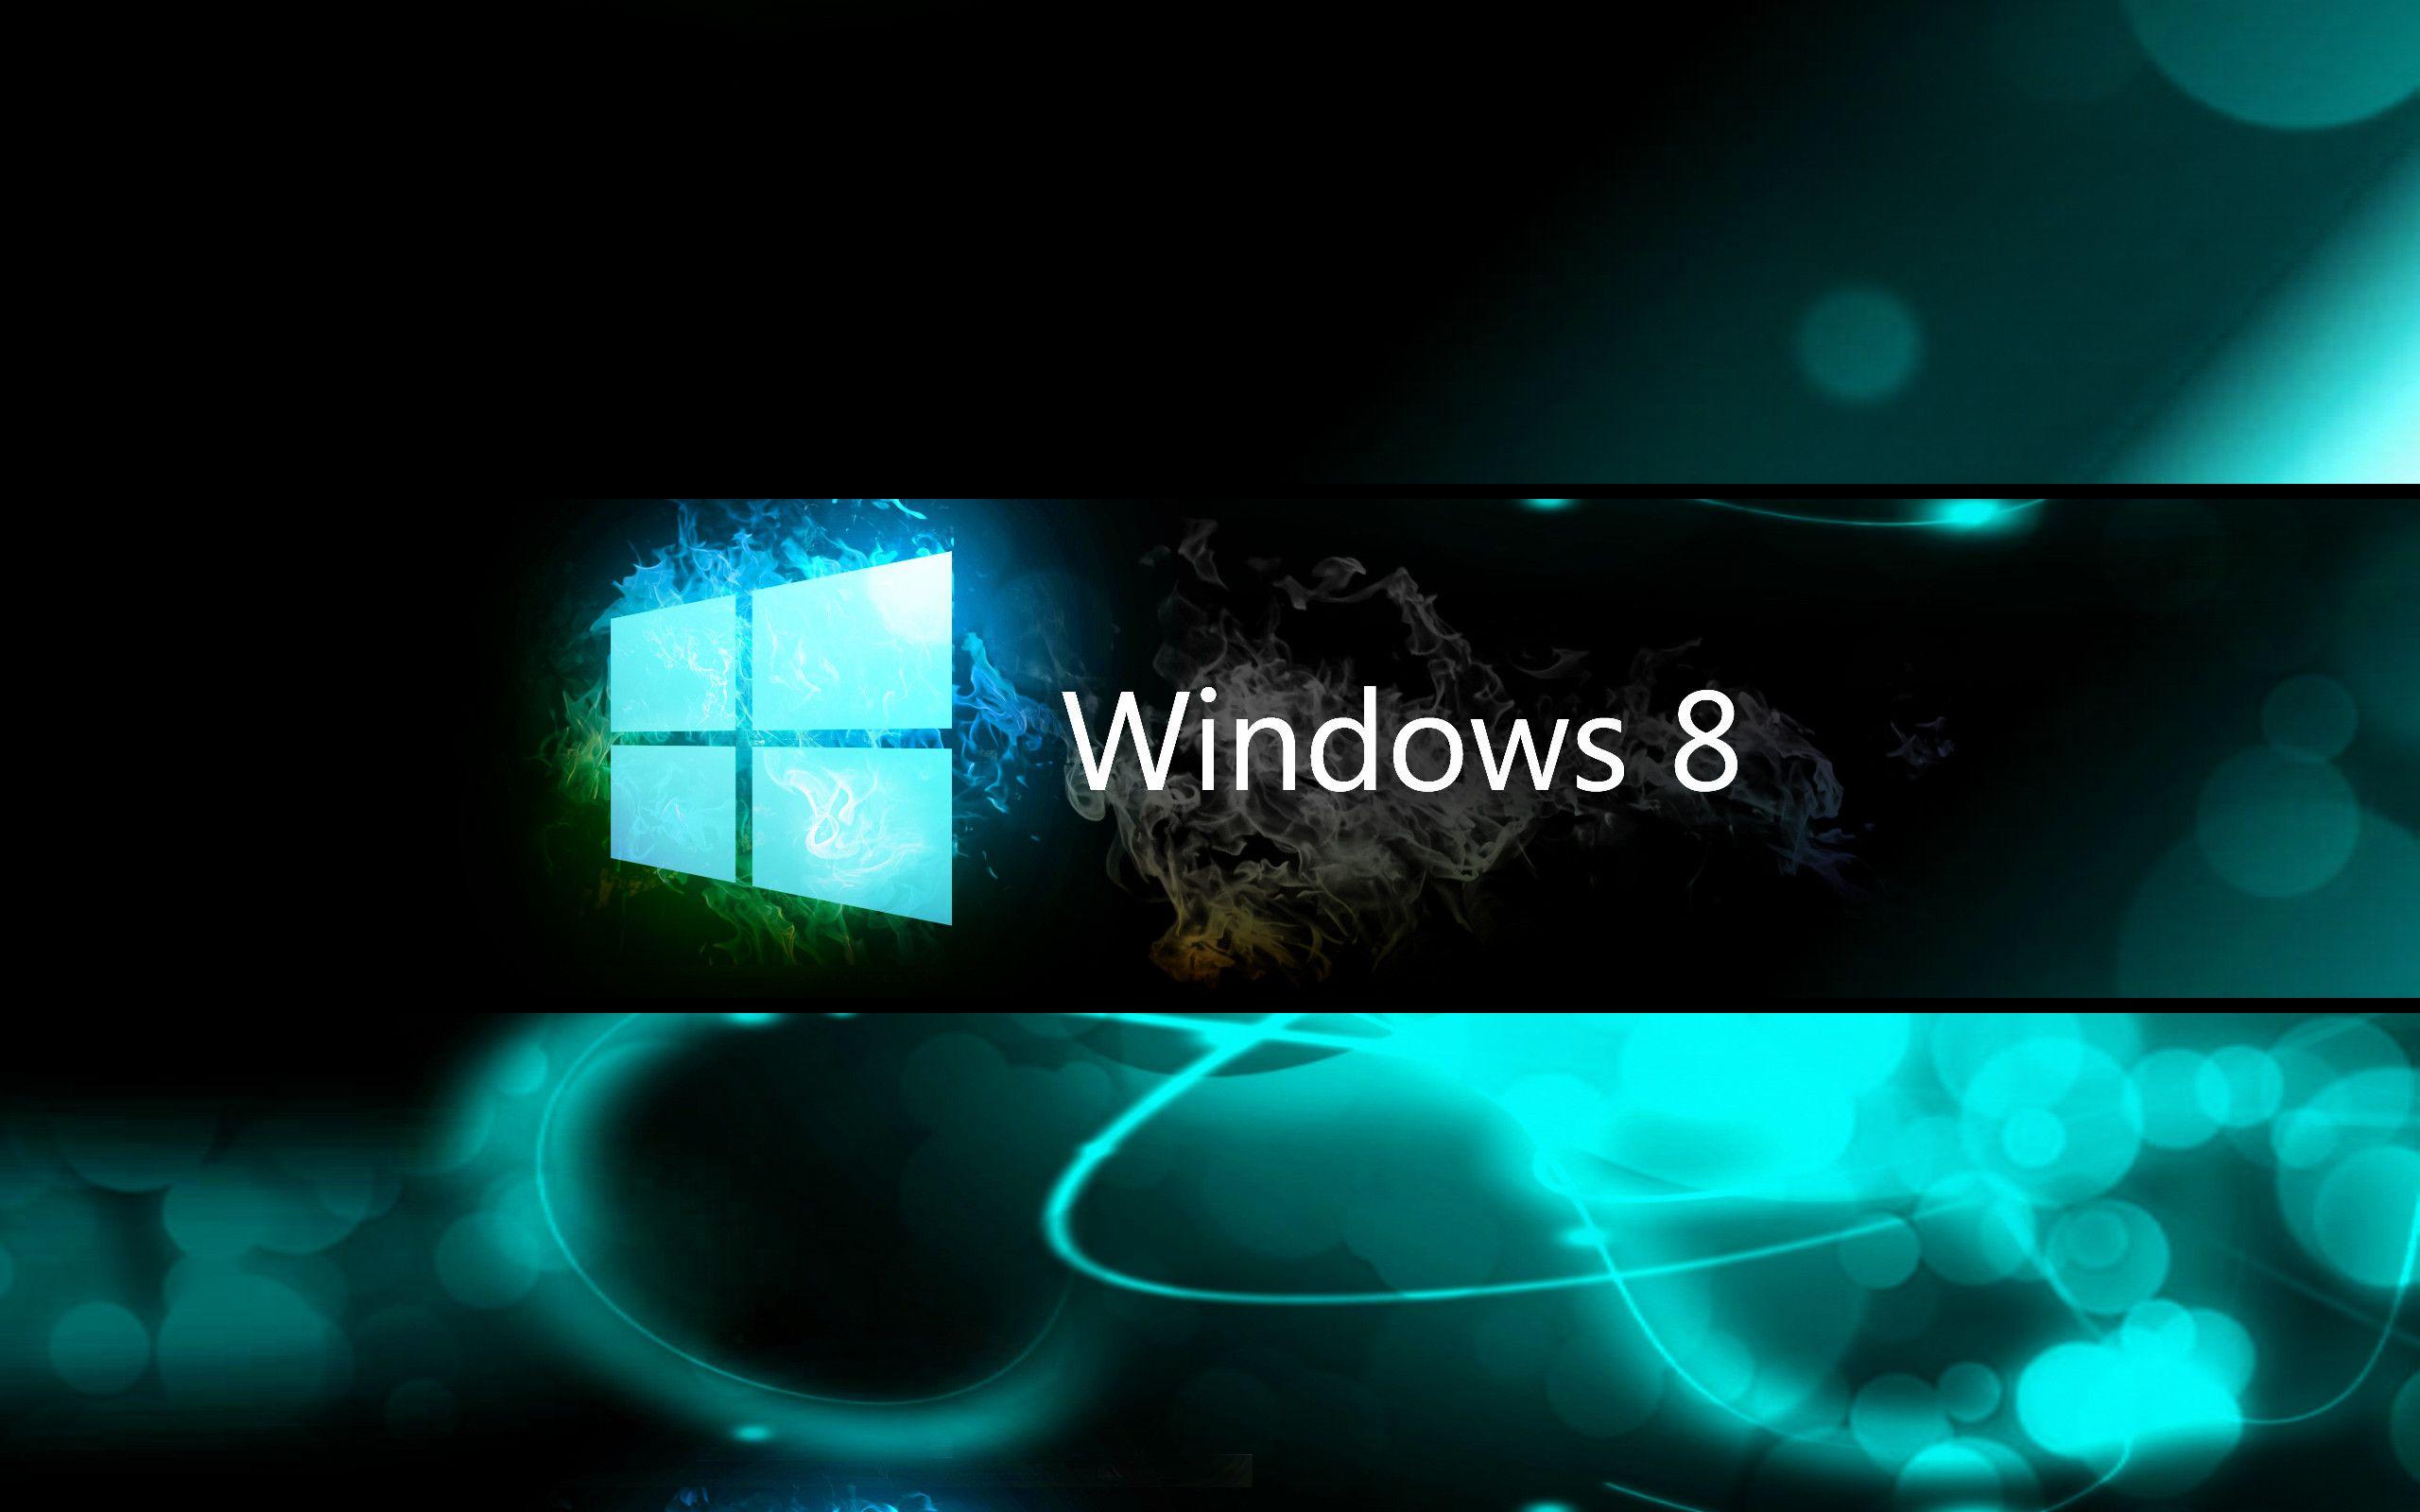 Windows 8 Wallpaper HD wallpaper search